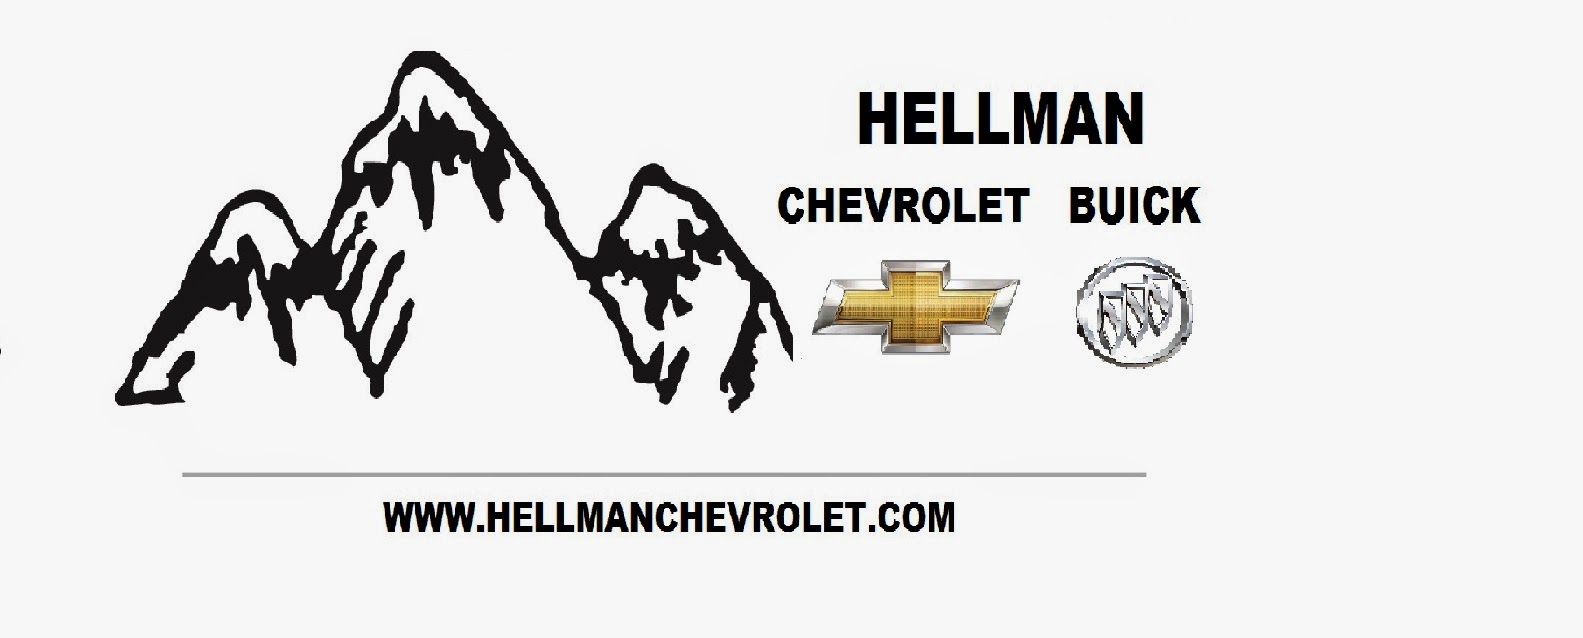 Hellman Chevrolet